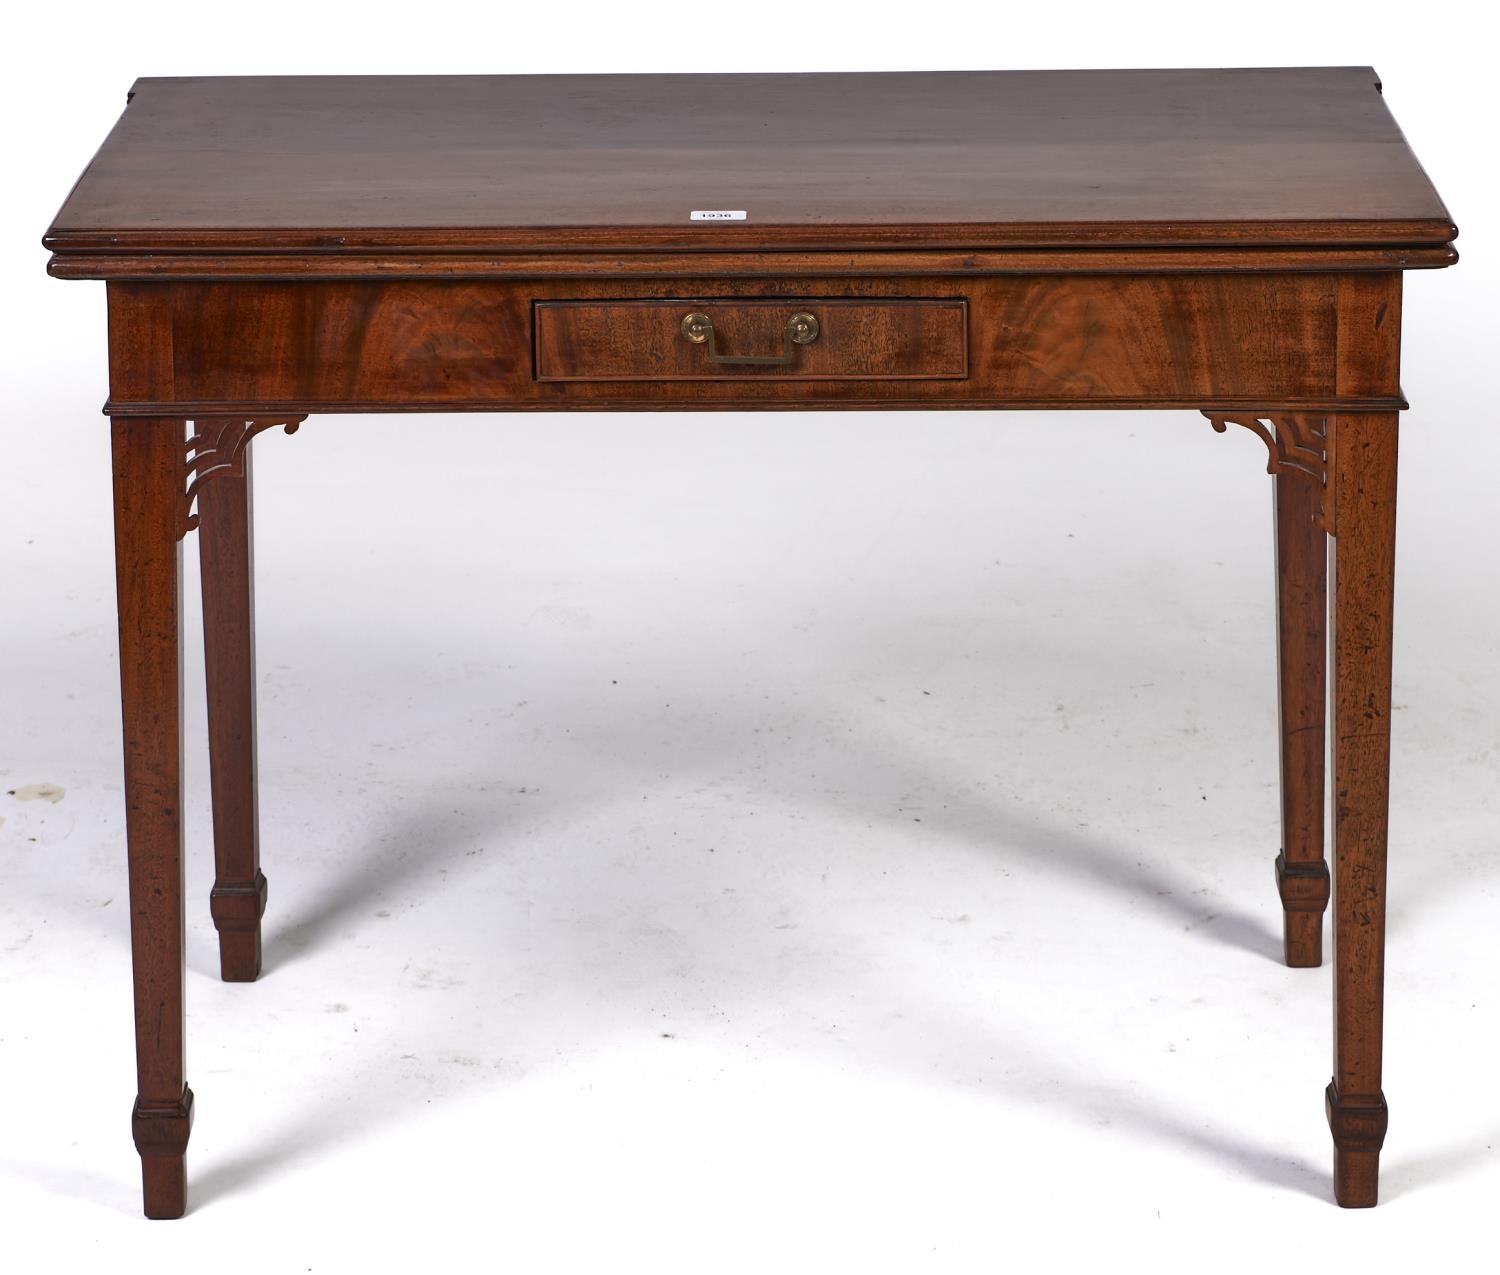 A George III mahogany tea table, c1800, the rectangular top with ovolu moulded lip, figured frieze